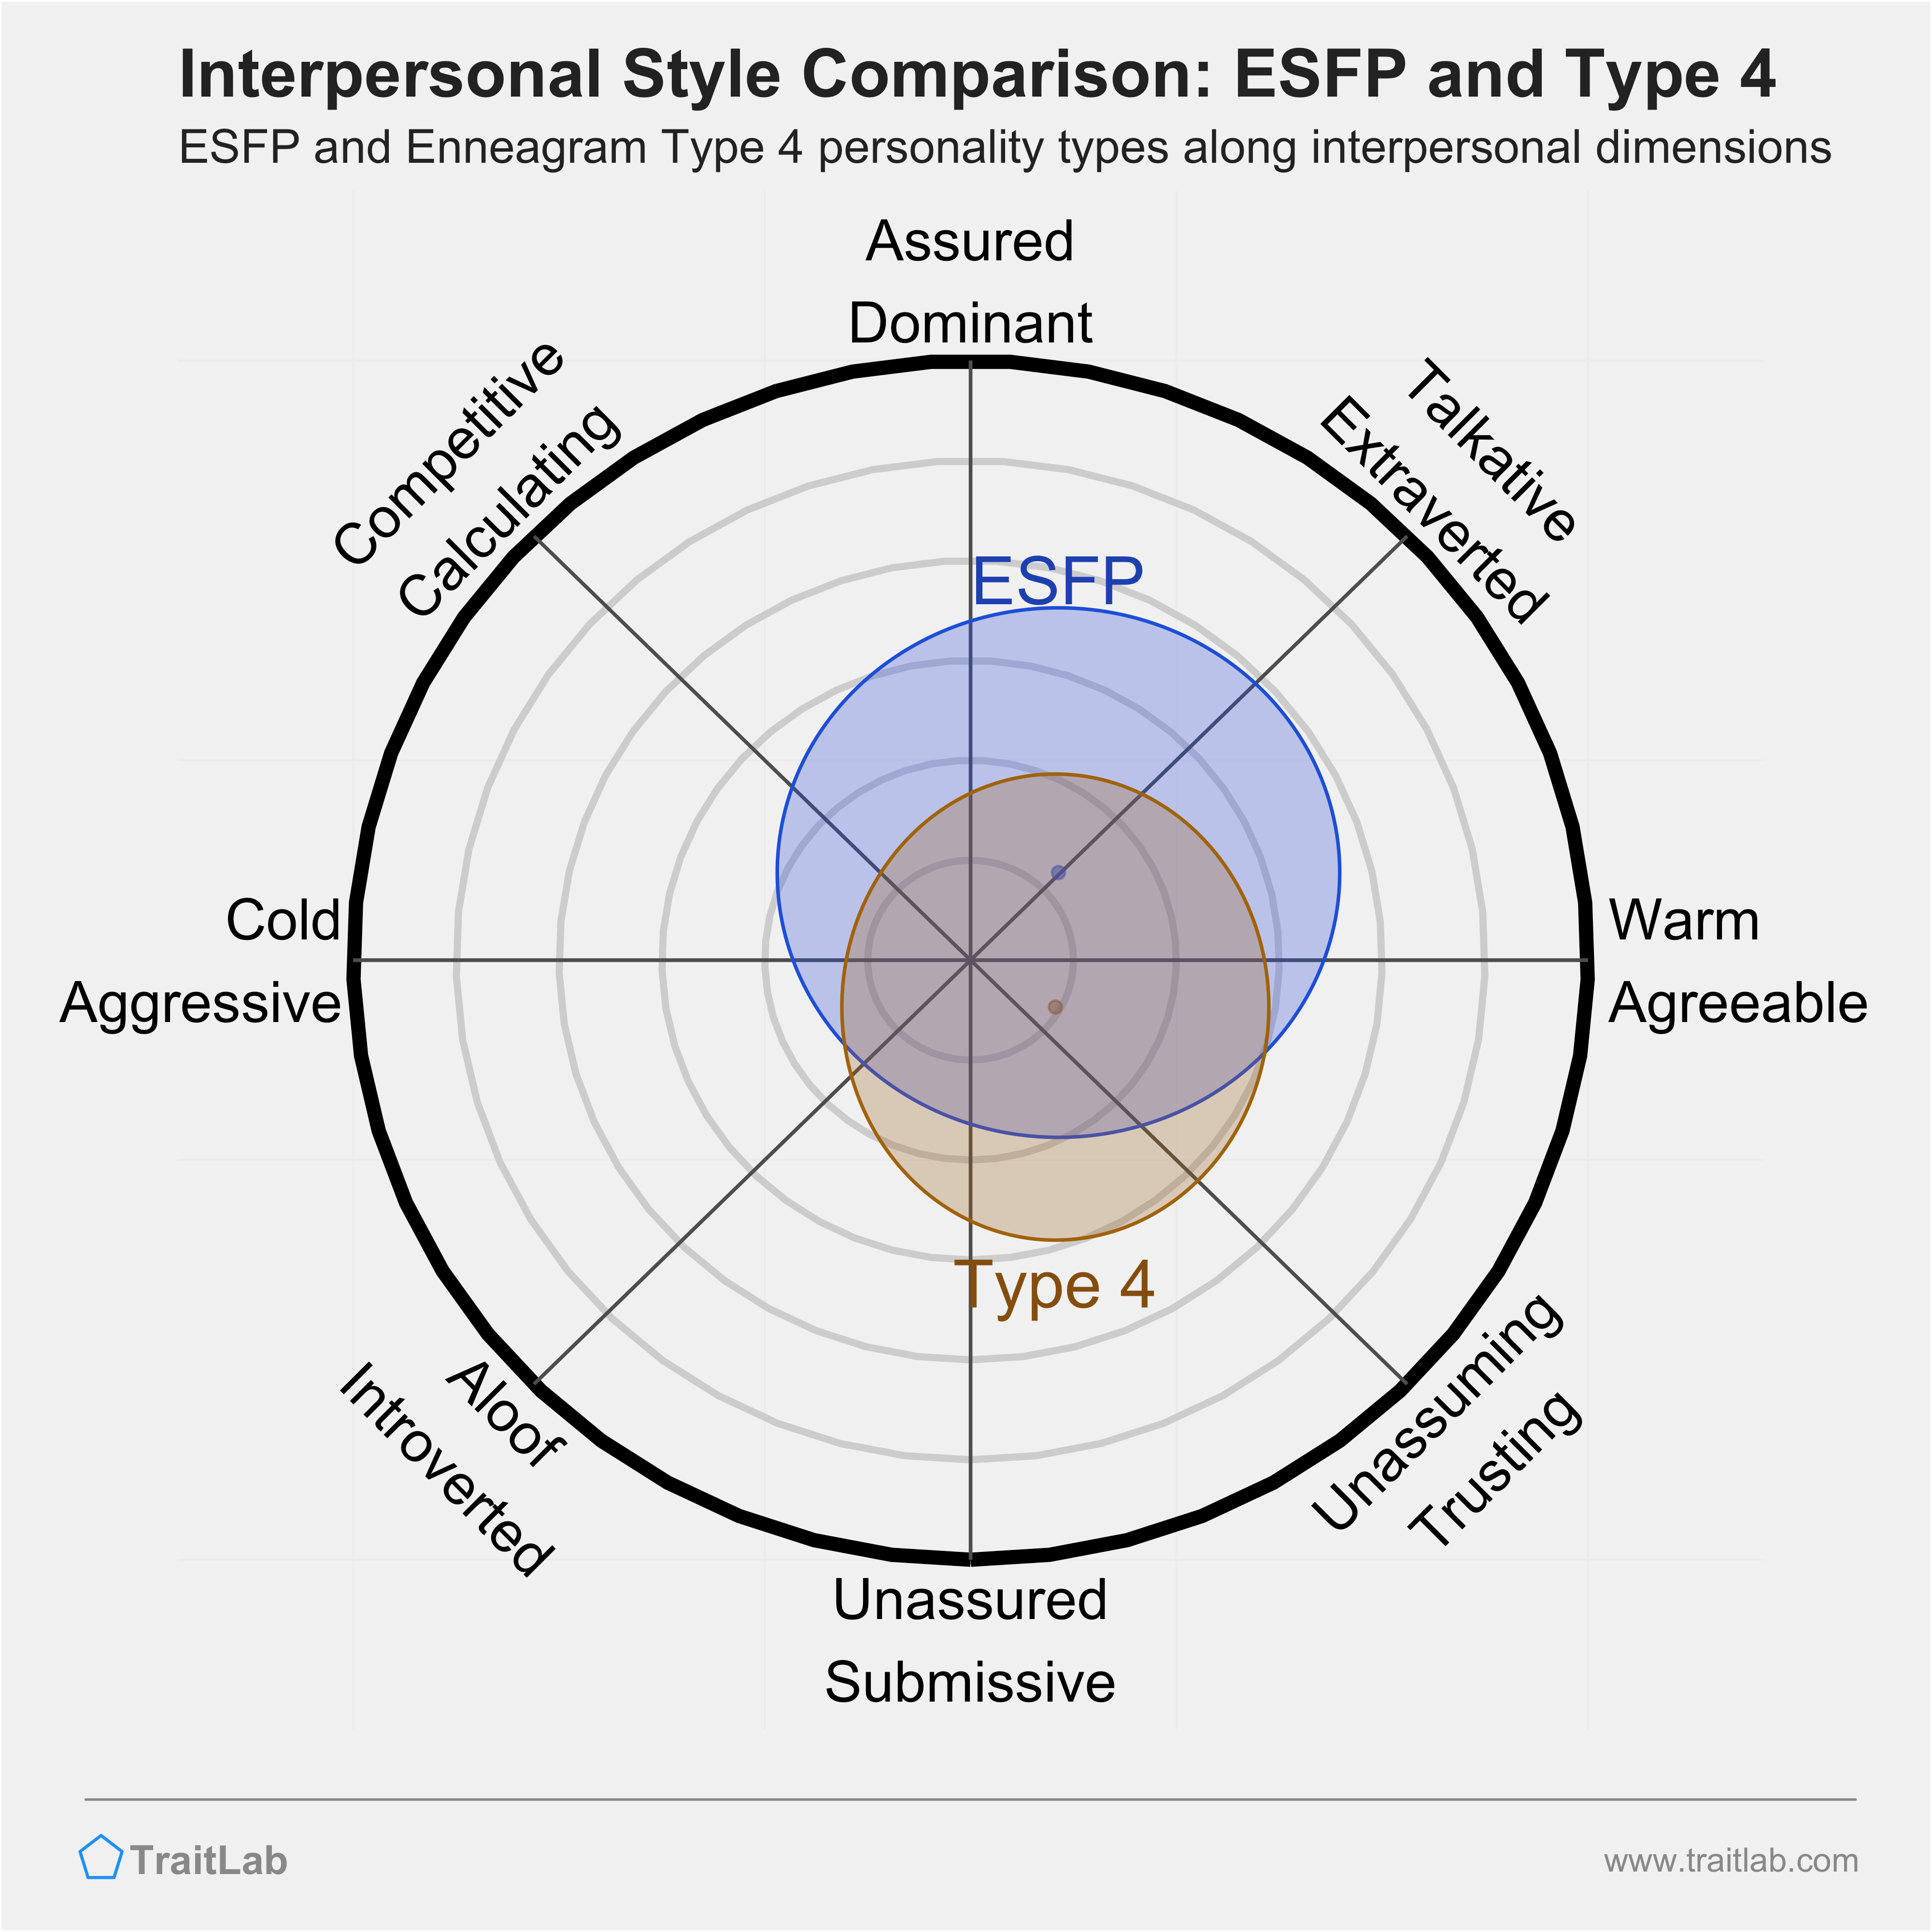 Enneagram ESFP and Type 4 comparison across interpersonal dimensions